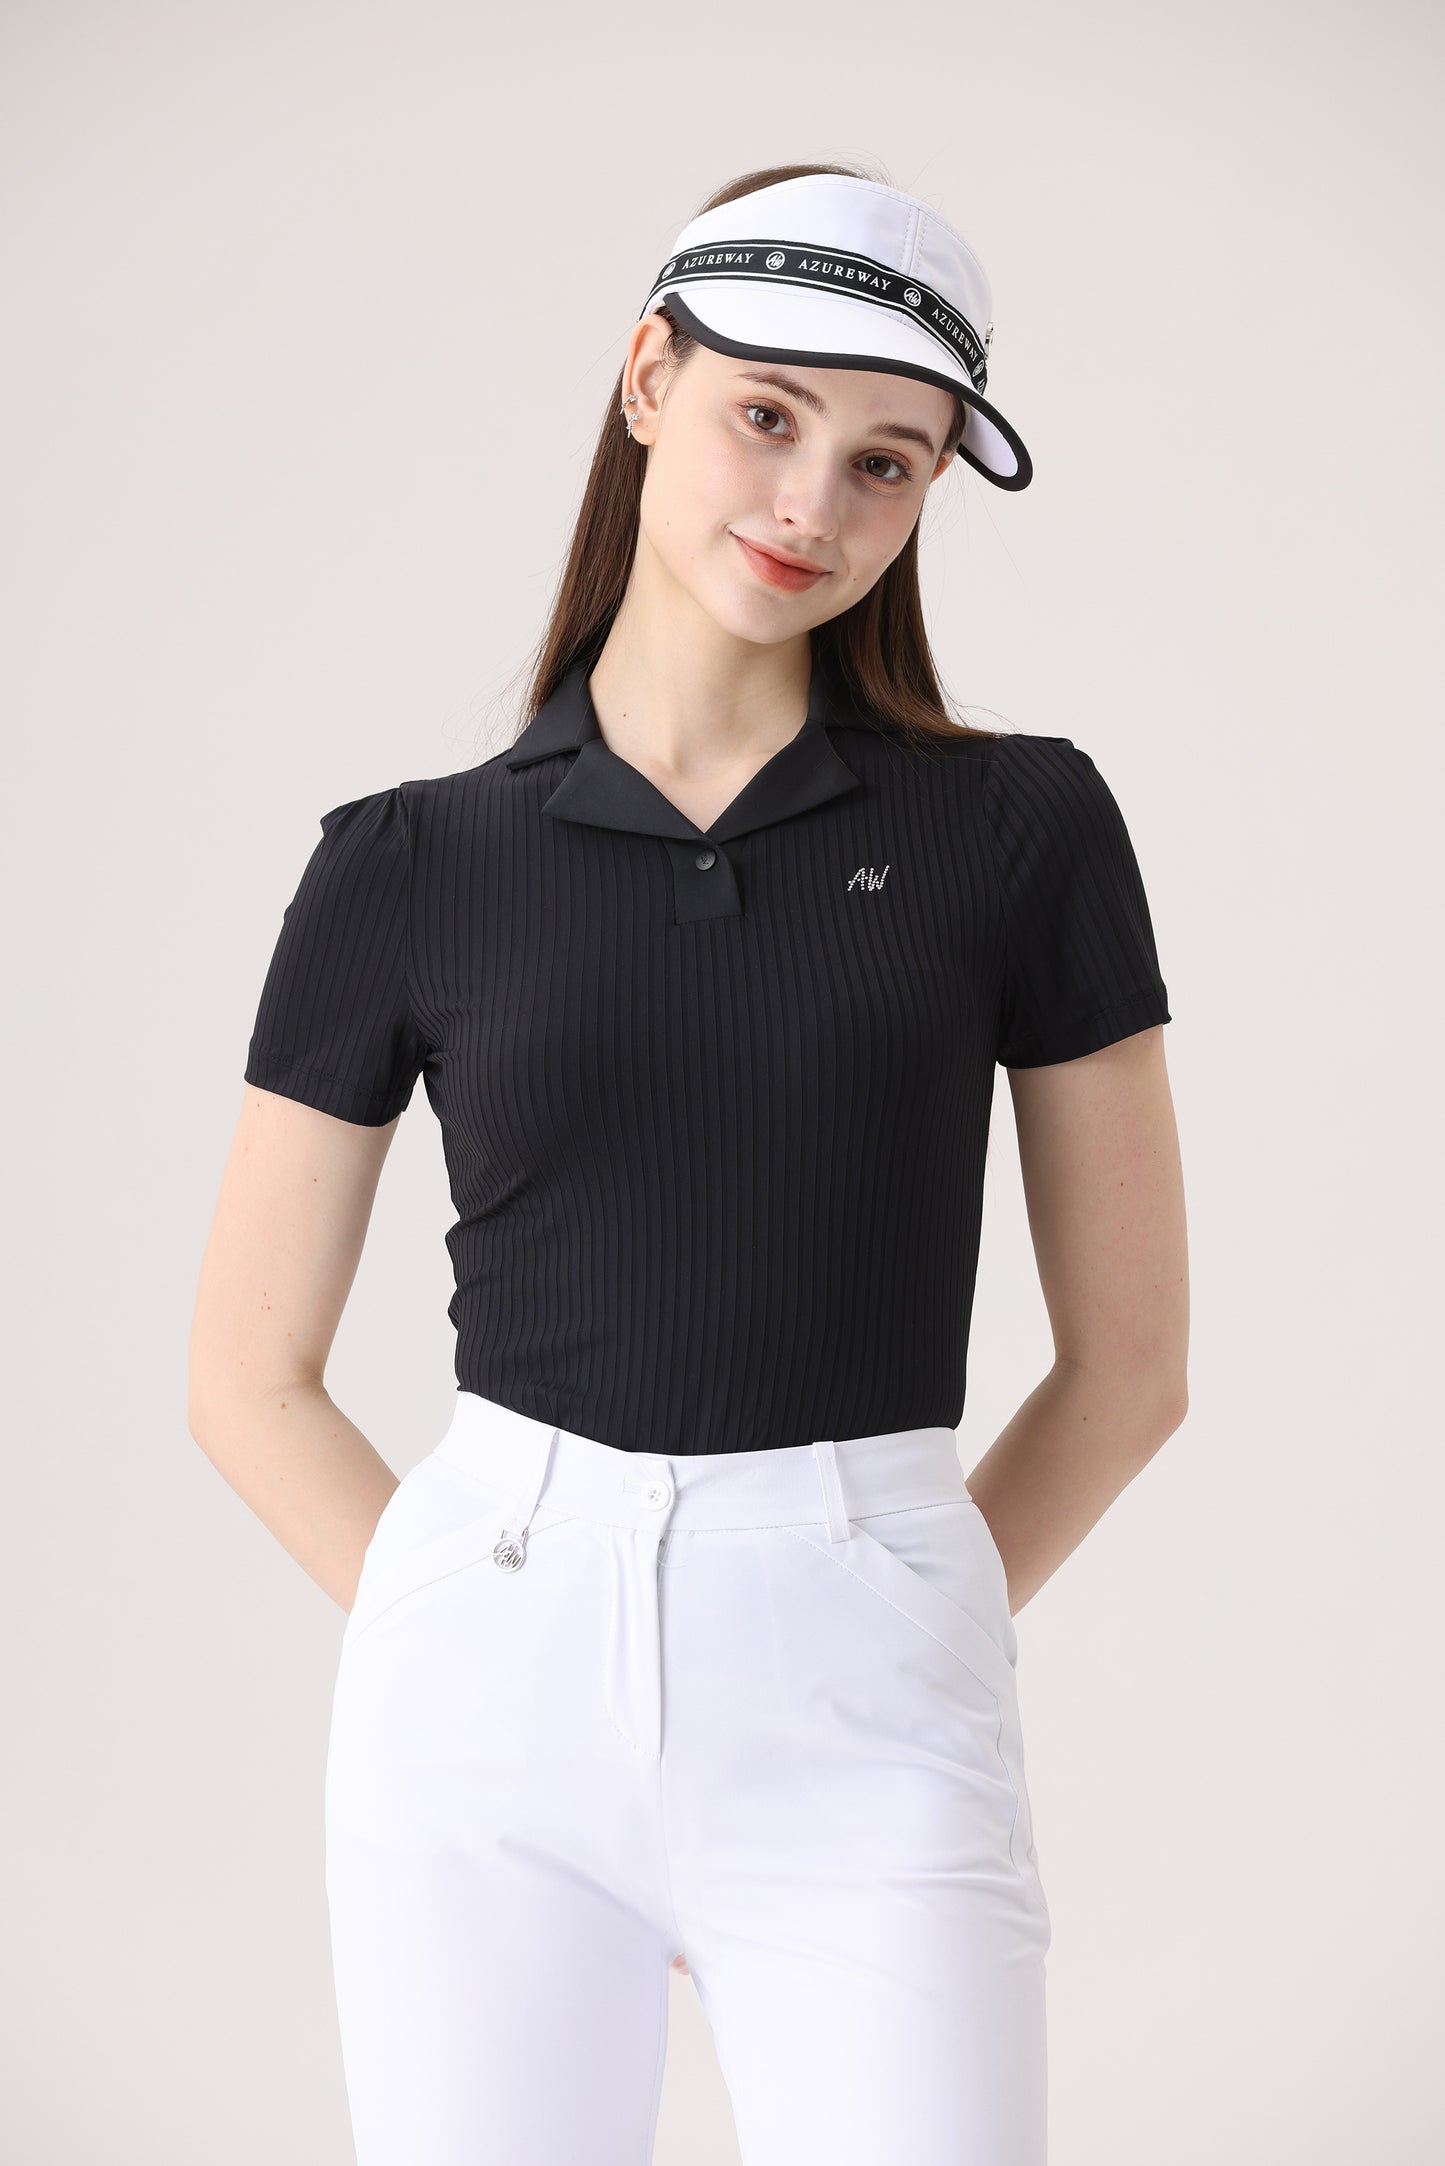 Azureway Summer Ladies Golf Shirt AW-T4113